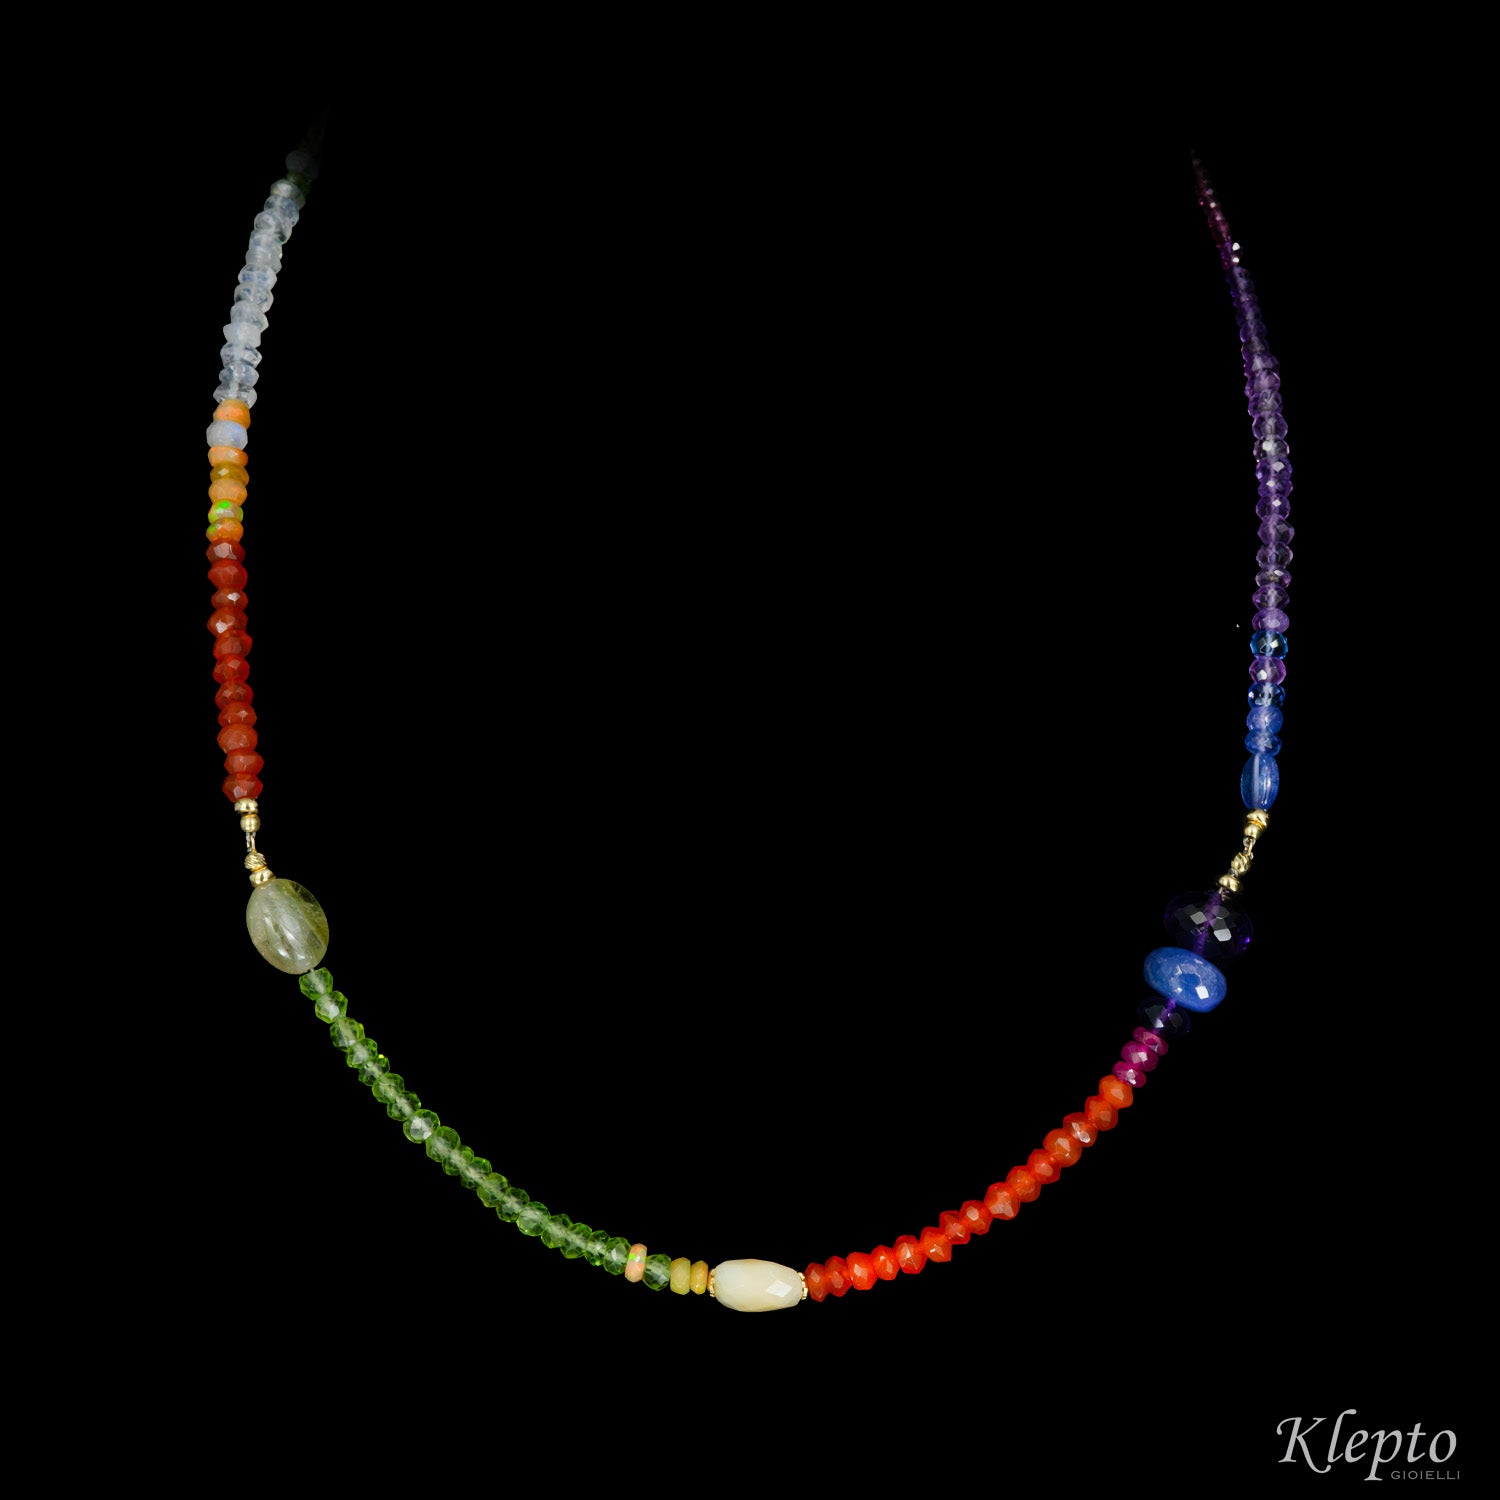 Short Rainbow necklace